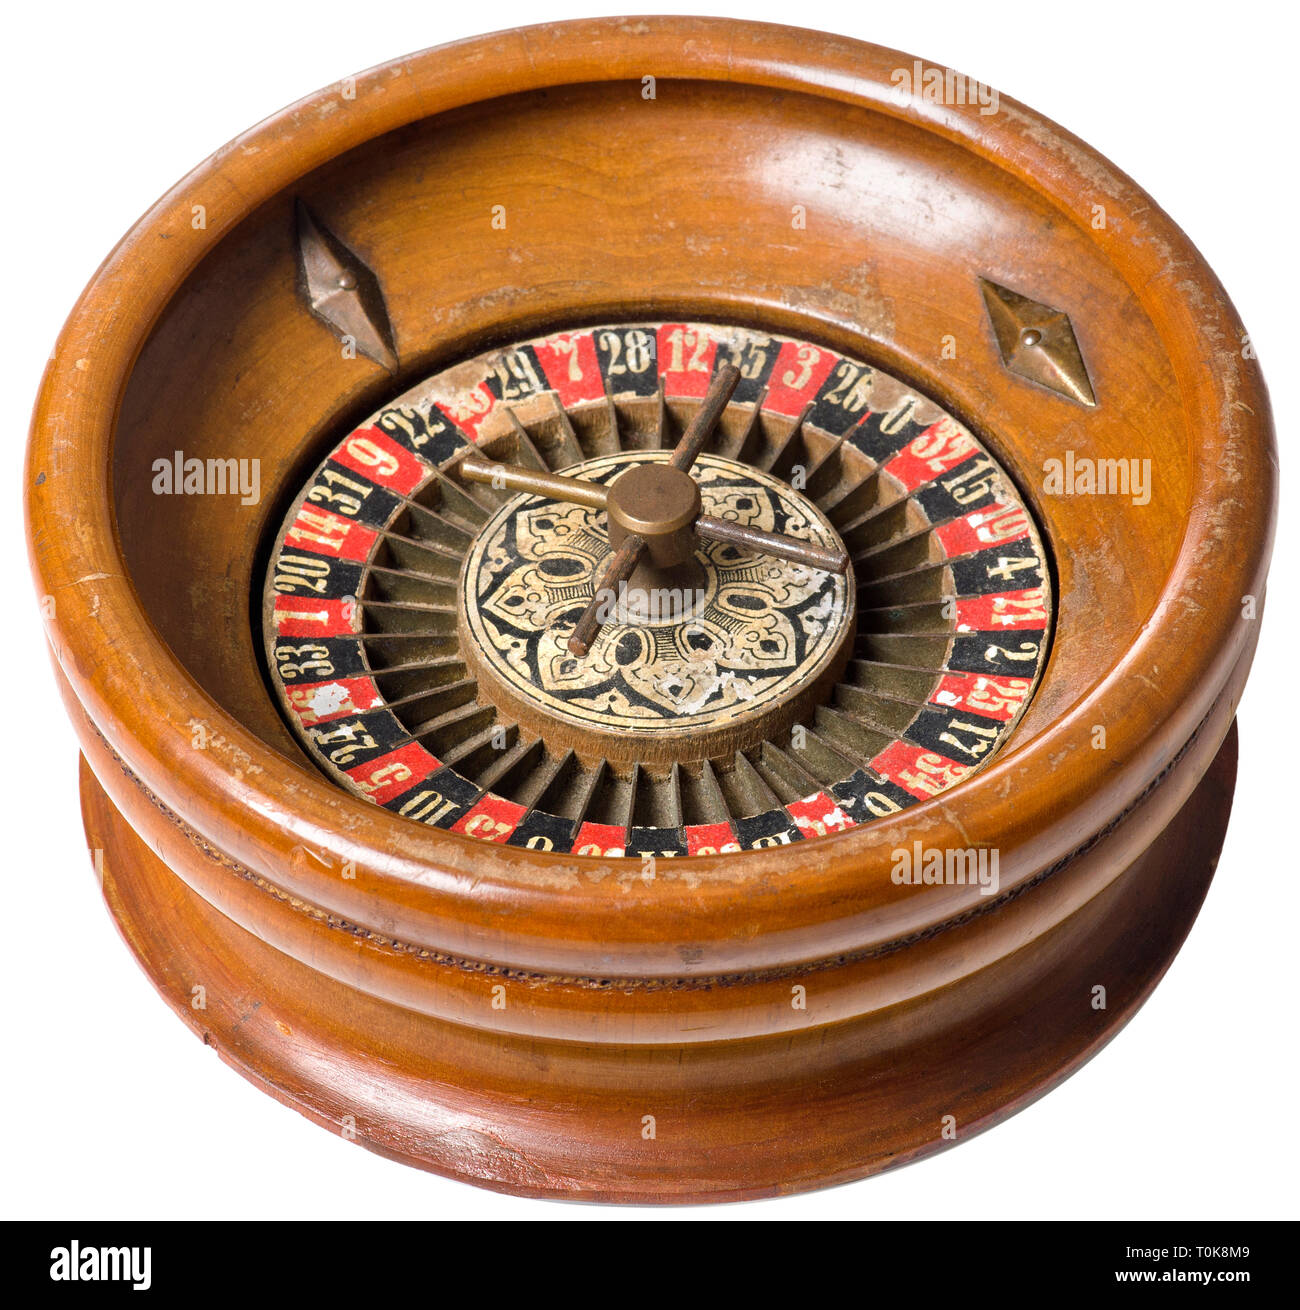 Spiele, Glücksspiel, Roulette, Roulette Rad, Deutschland, um 1900,  Additional-Rights - Clearance-Info - Not-Available Stockfotografie - Alamy